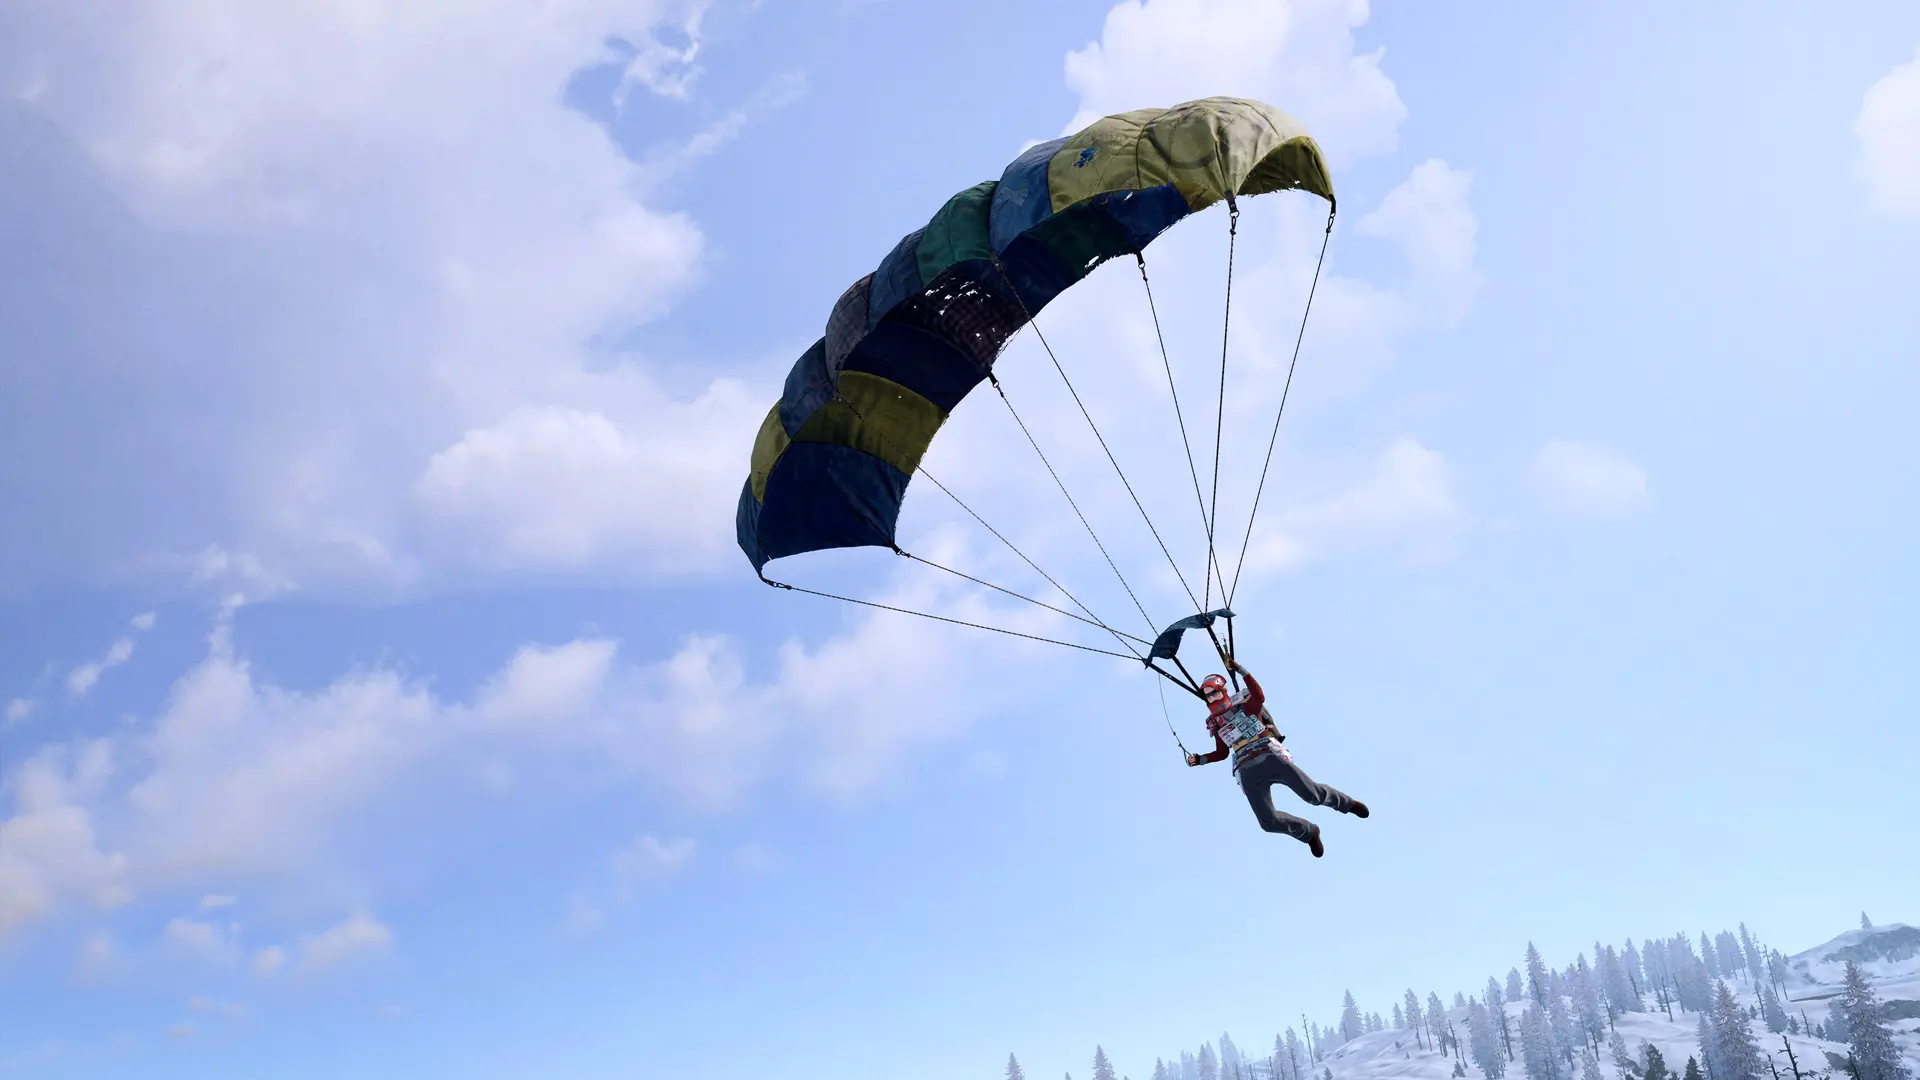 Rust player parachuting down